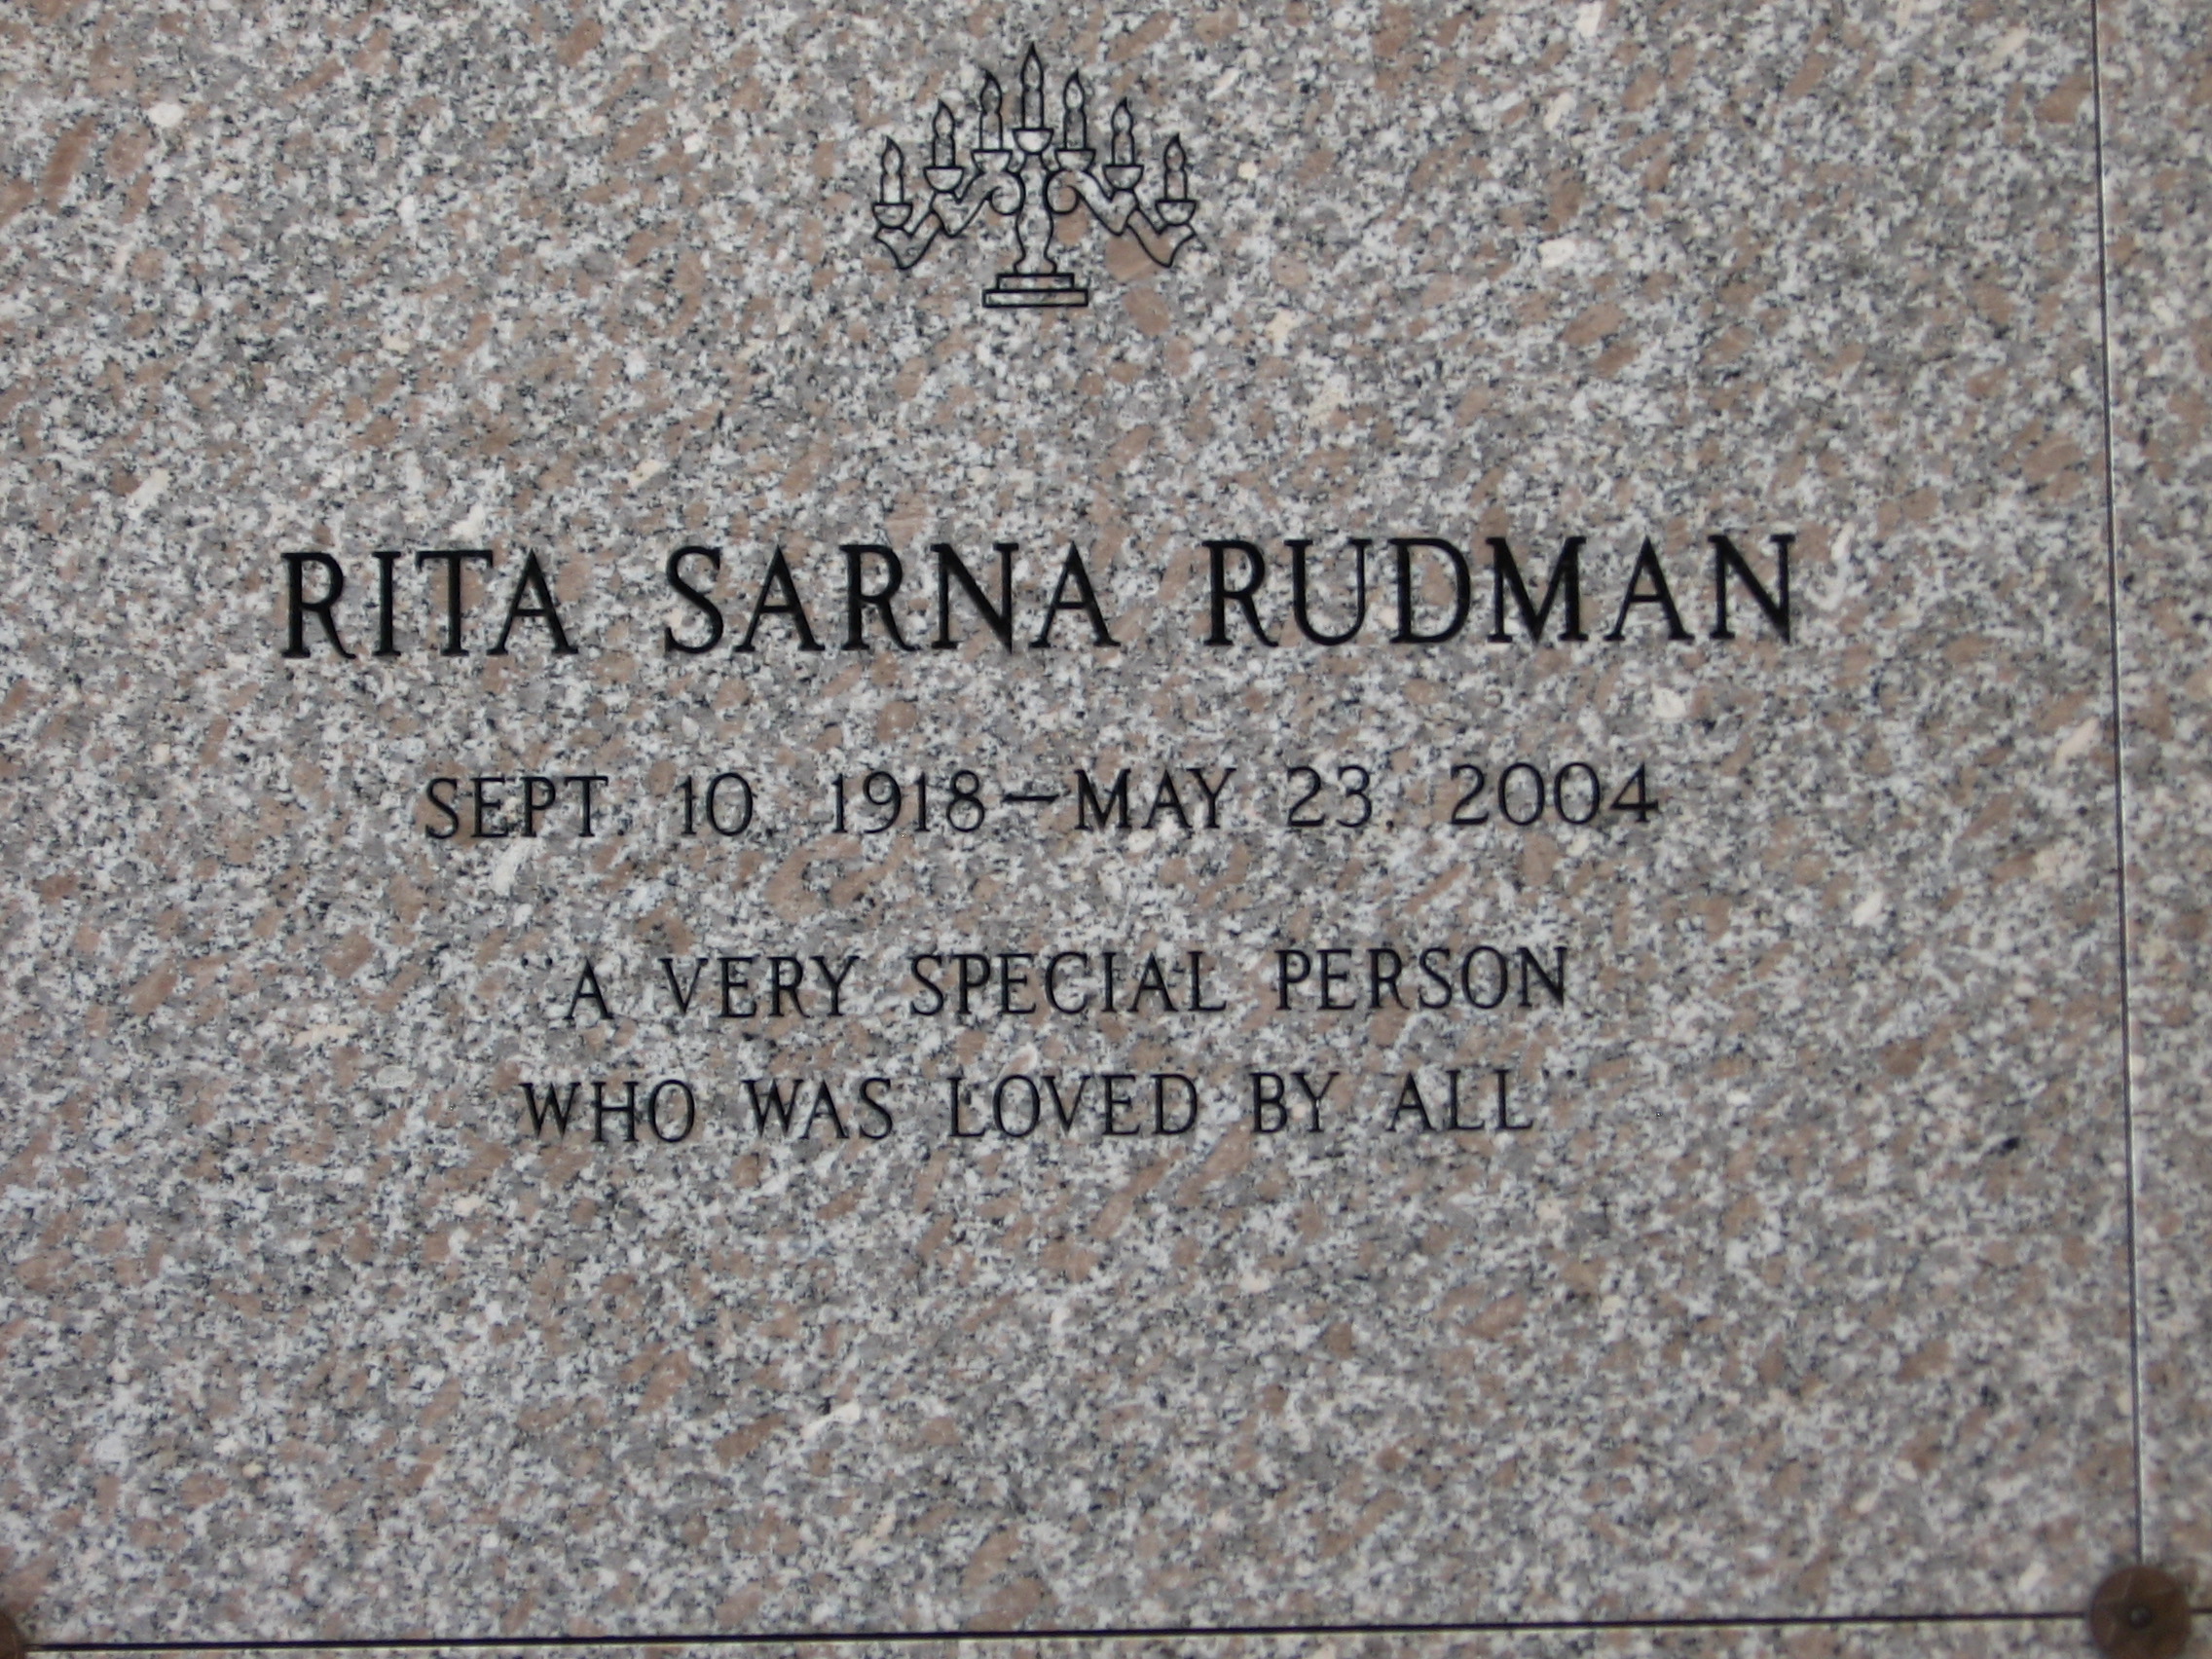 Rita Sarna Rudman